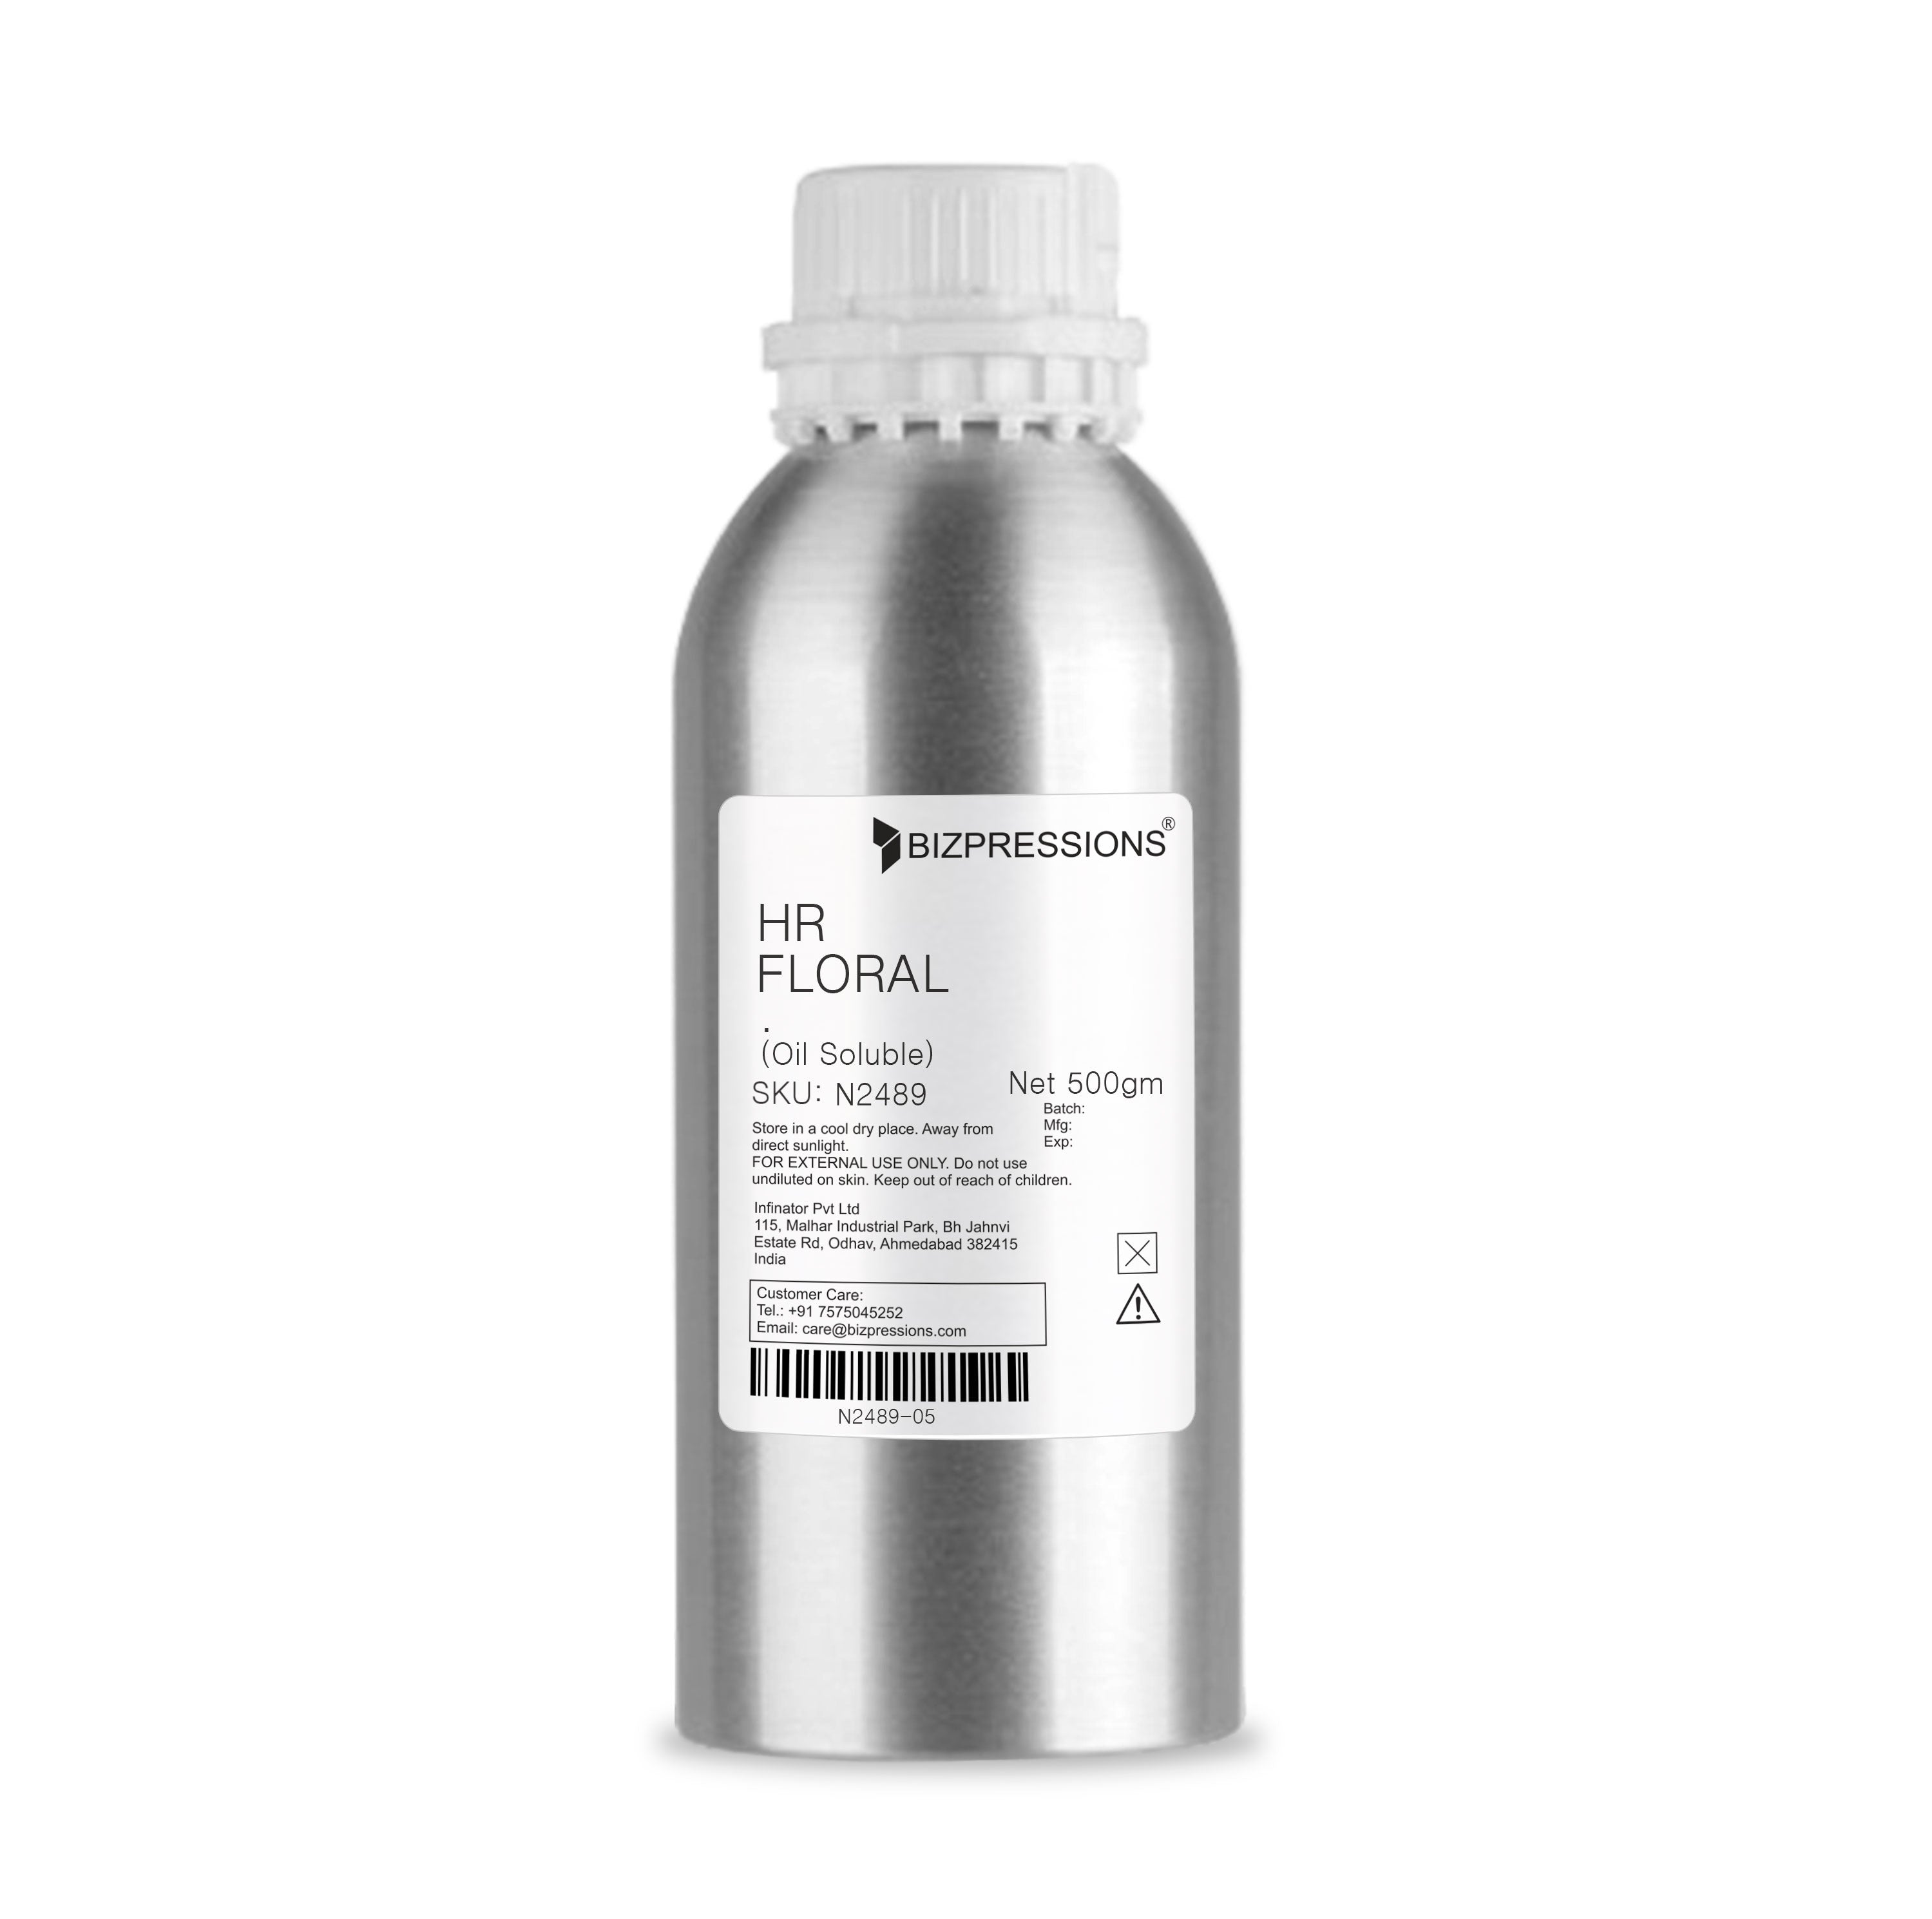 HR FLORAL- Fragrance (Oil Soluble)